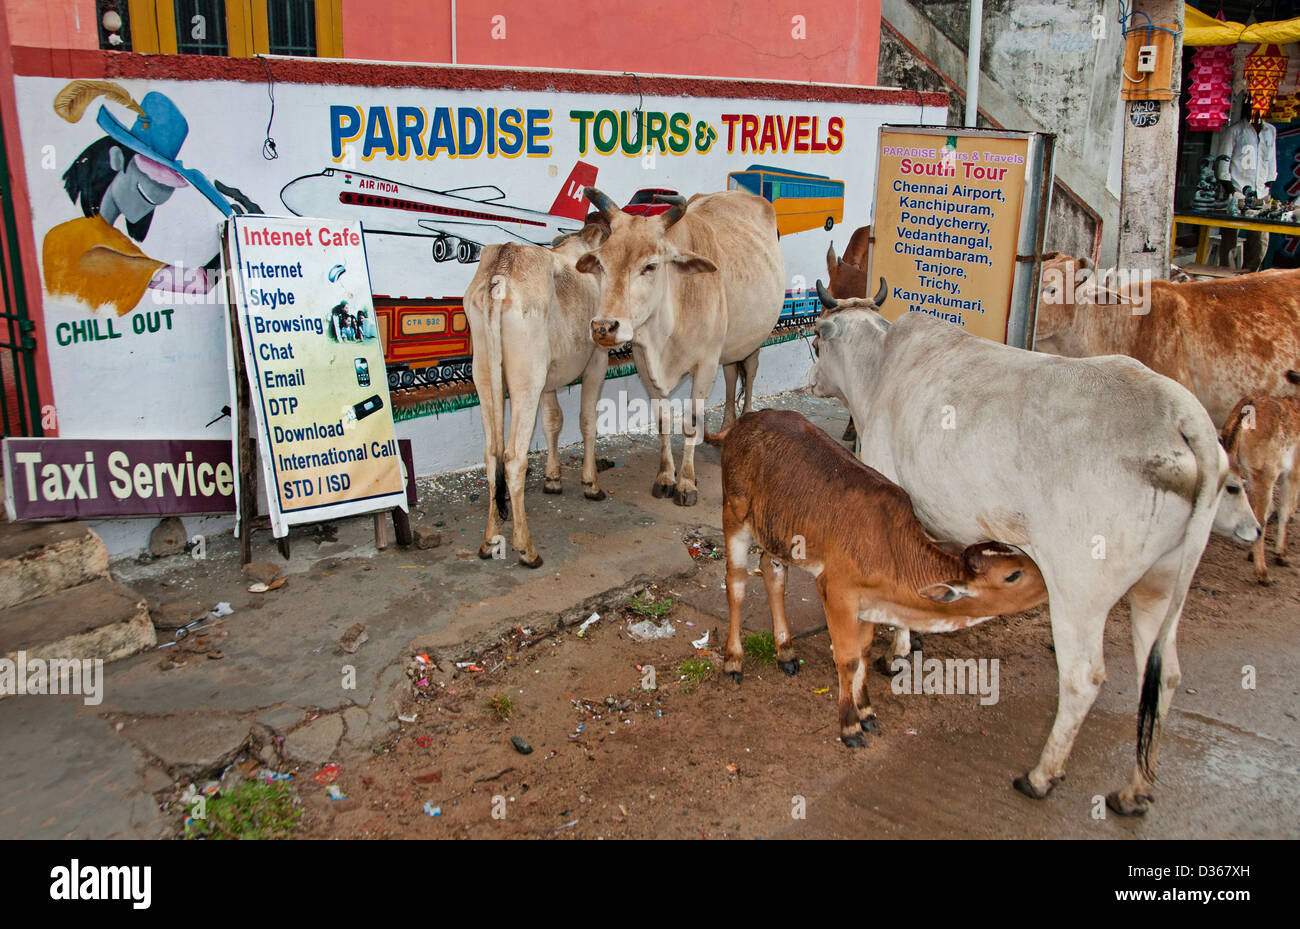 Holy Cows Travel agency Travels Paradise Tours Covelong ( Kovalam or Cobelon ) India Tamil Nadu Stock Photo